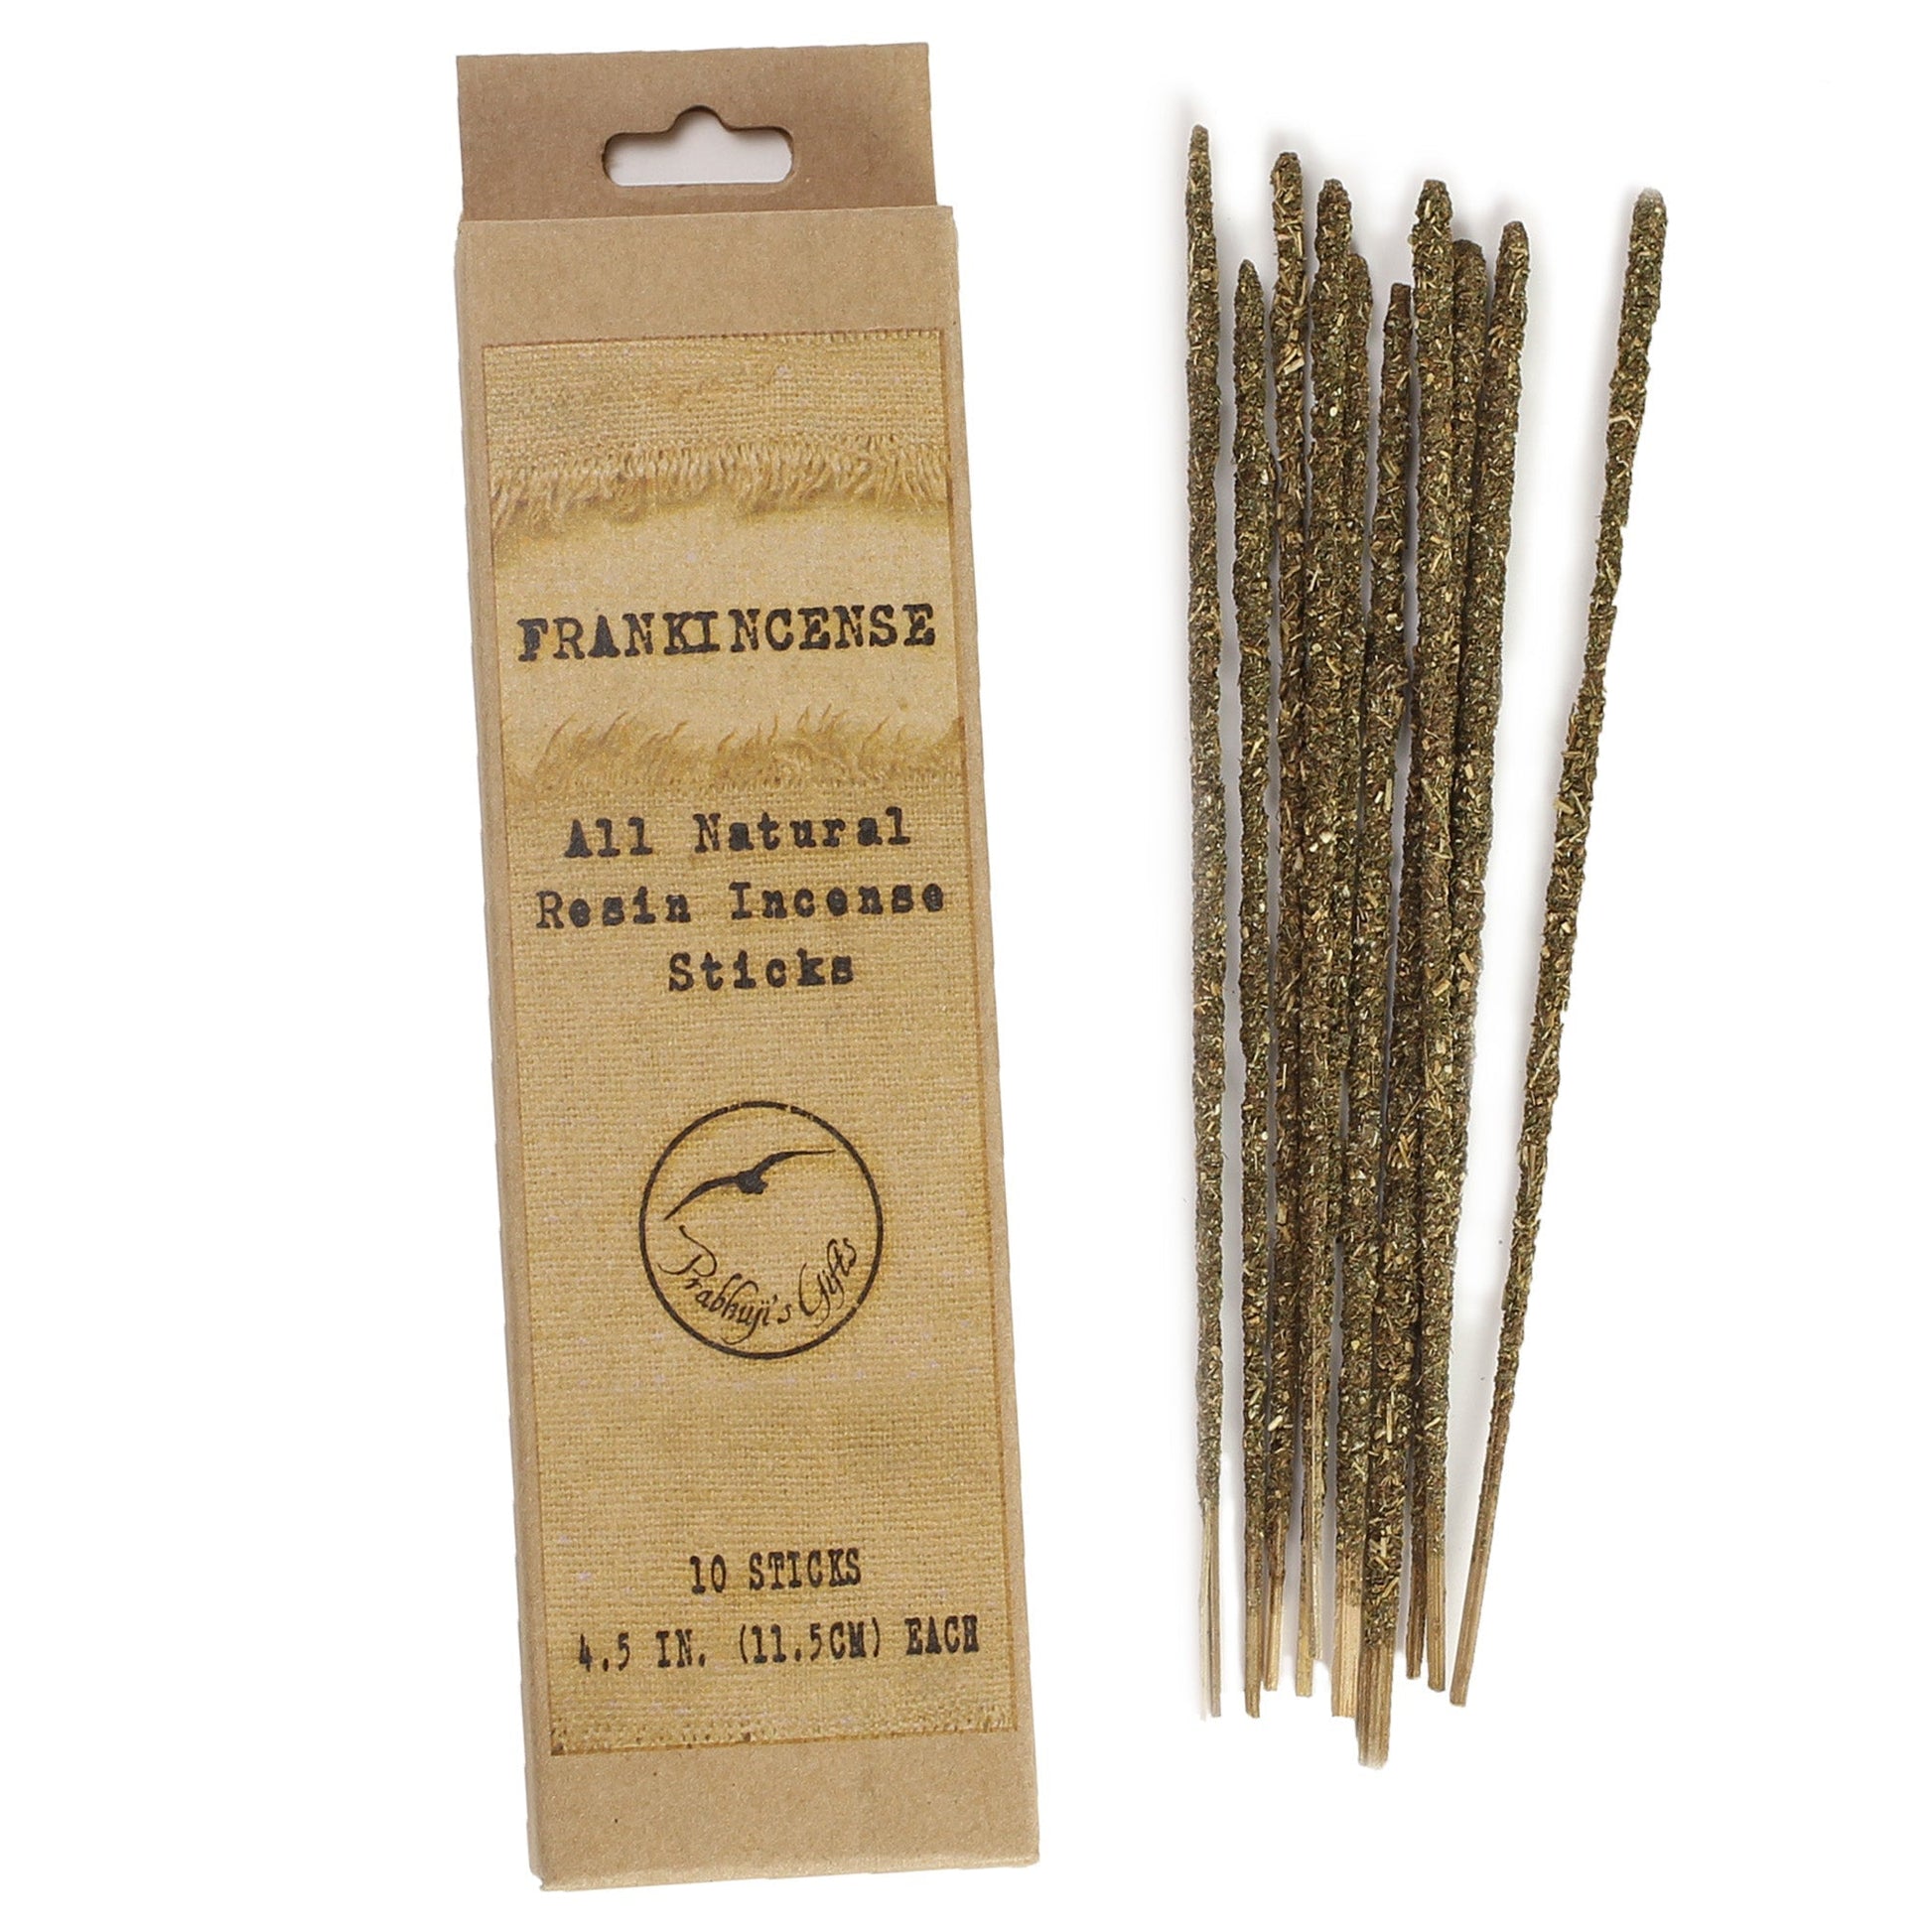 Smudging Incense - Frankincense - Natural Resin Incense sticks - Tree Spirit Wellness